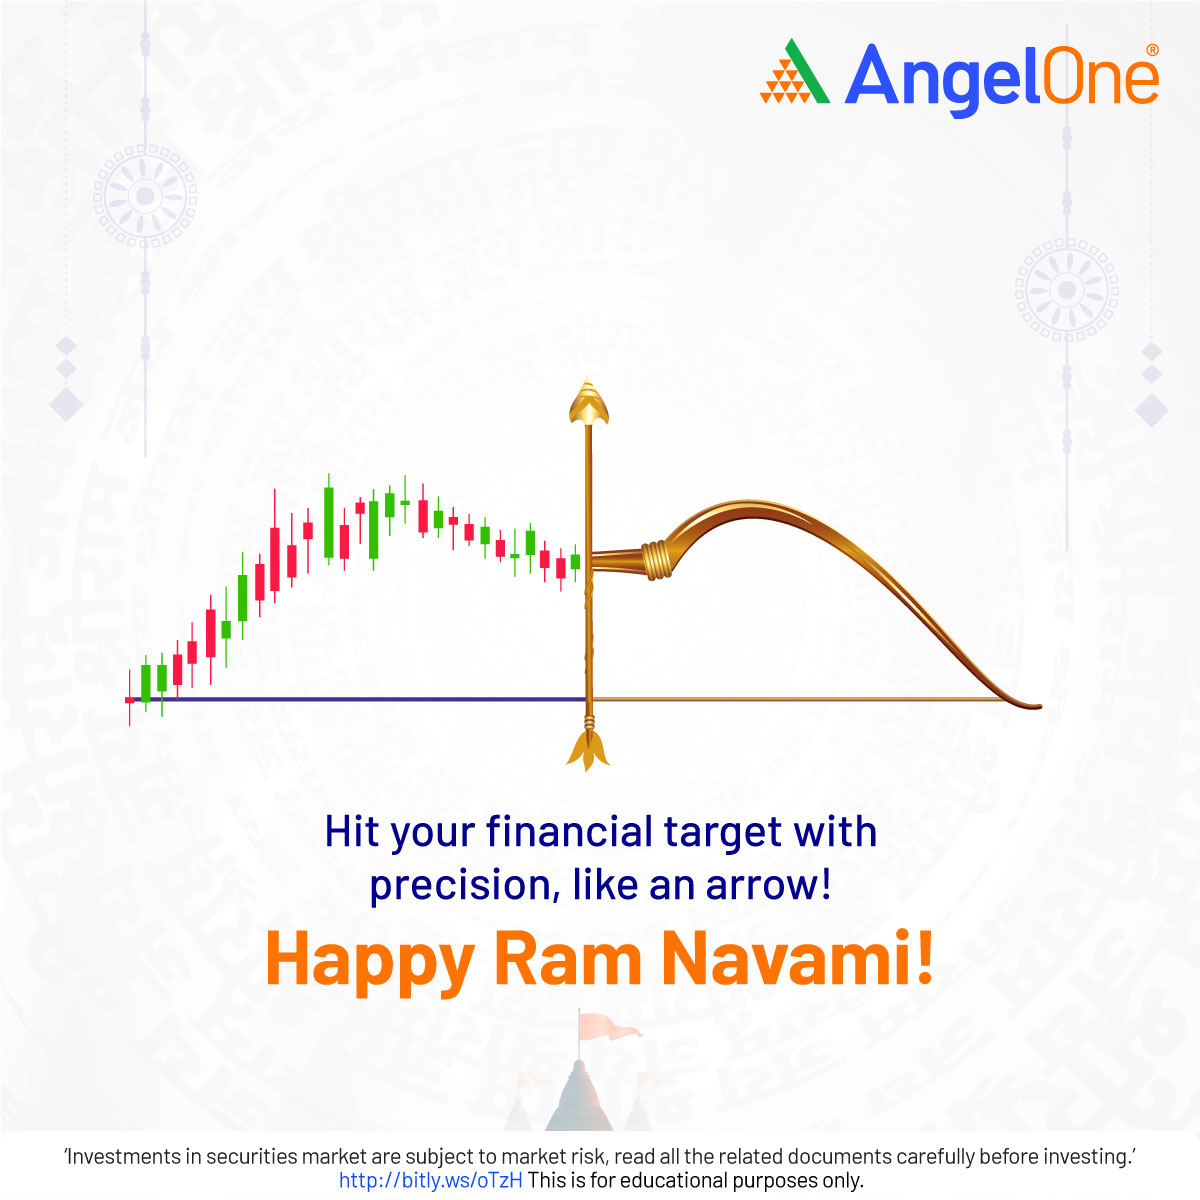 Wishing everyone a Happy Ram Navami! #AngelOne #RamNavami #RamNavami2024